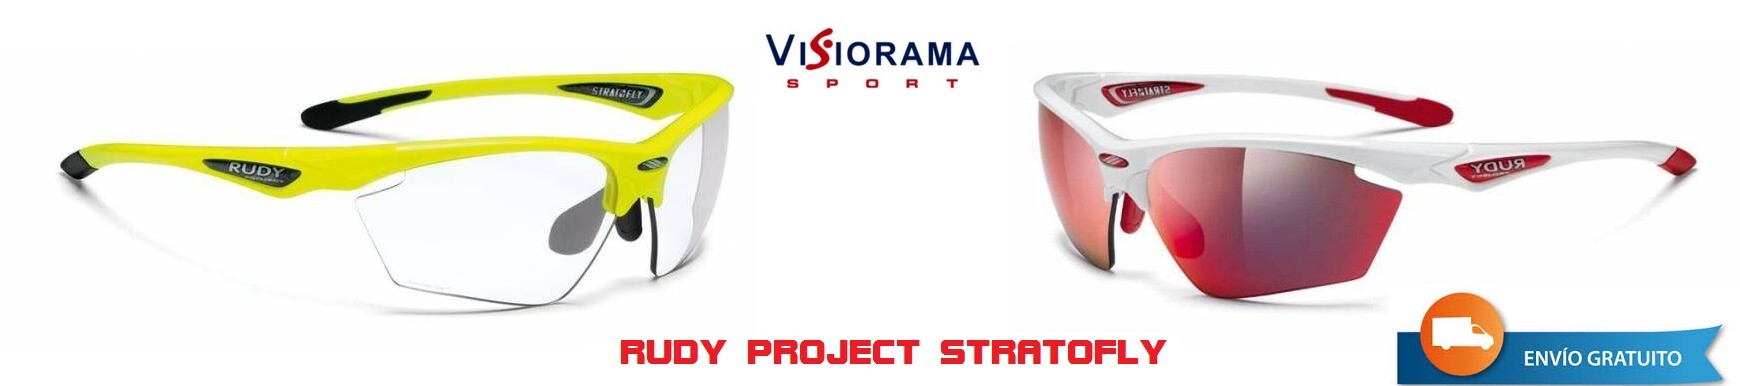 Rudy Projektförderung bei VisioramaSport